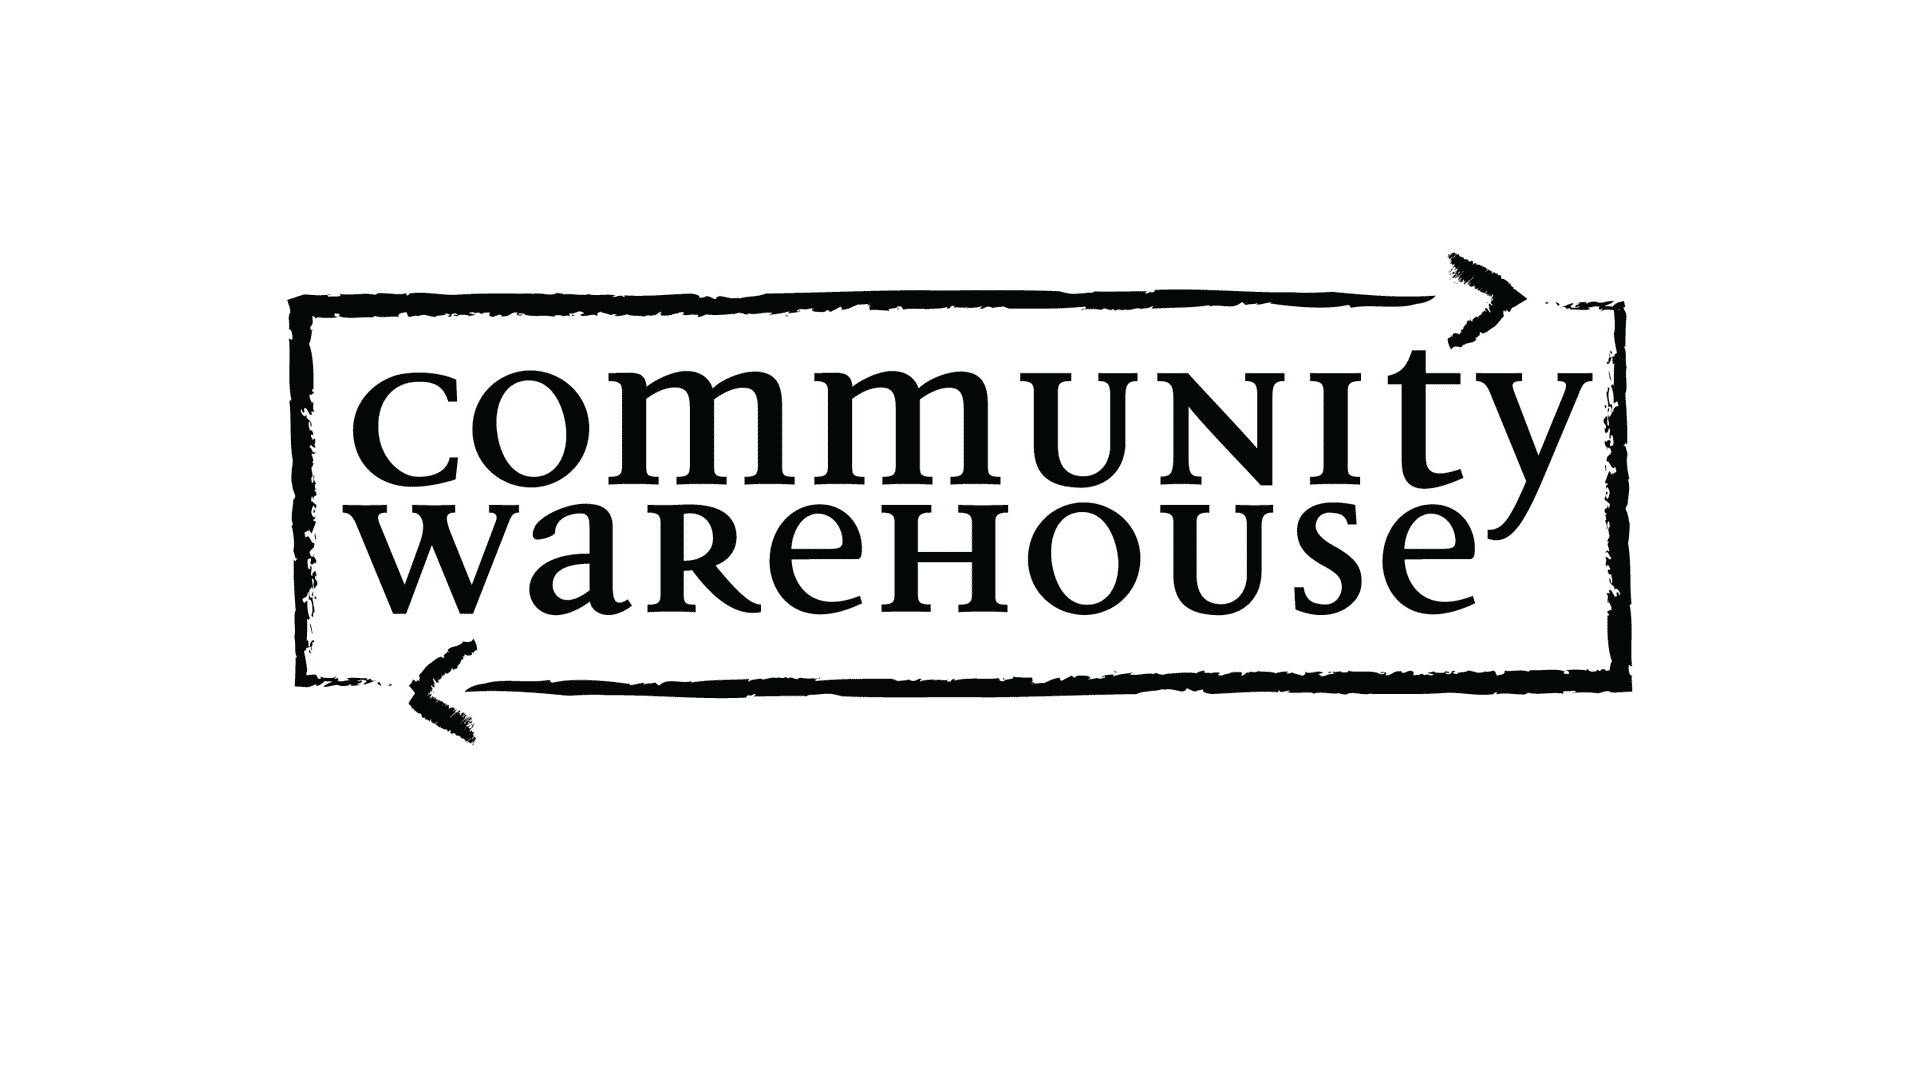 (c) Communitywarehouse.org